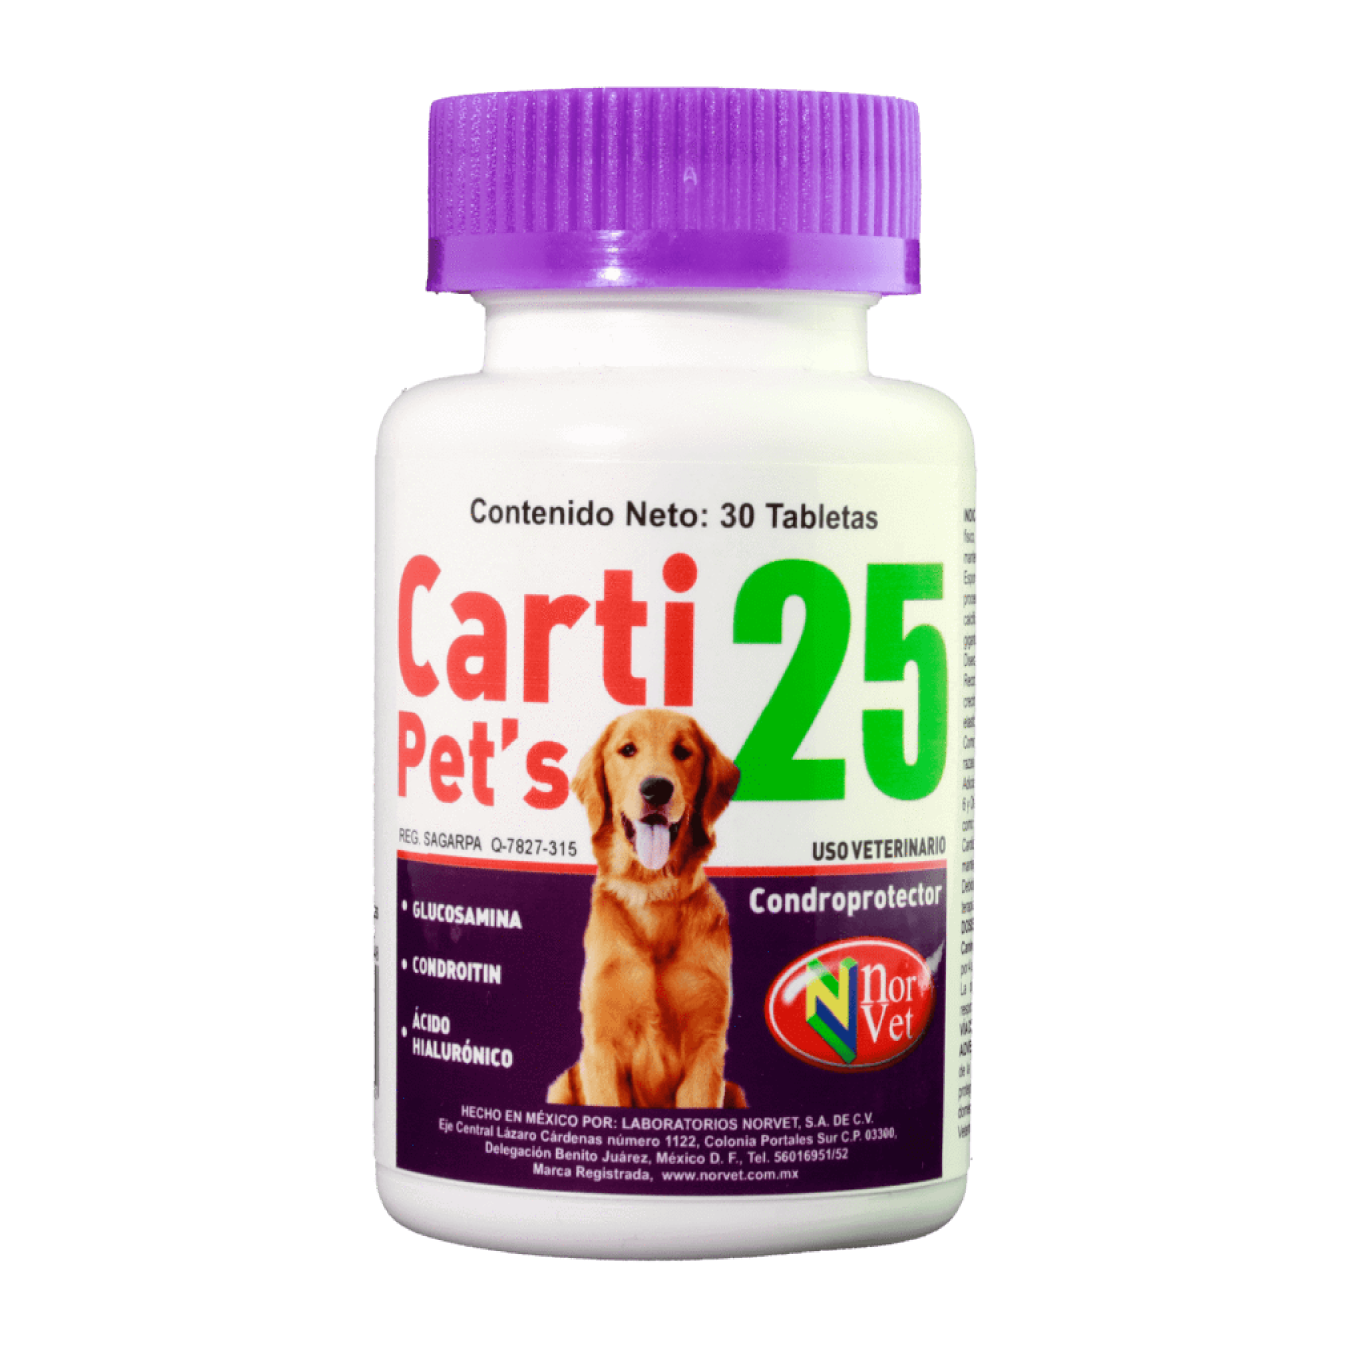 Carti Pets 25 Norvet  30 Tabletas glucosamina